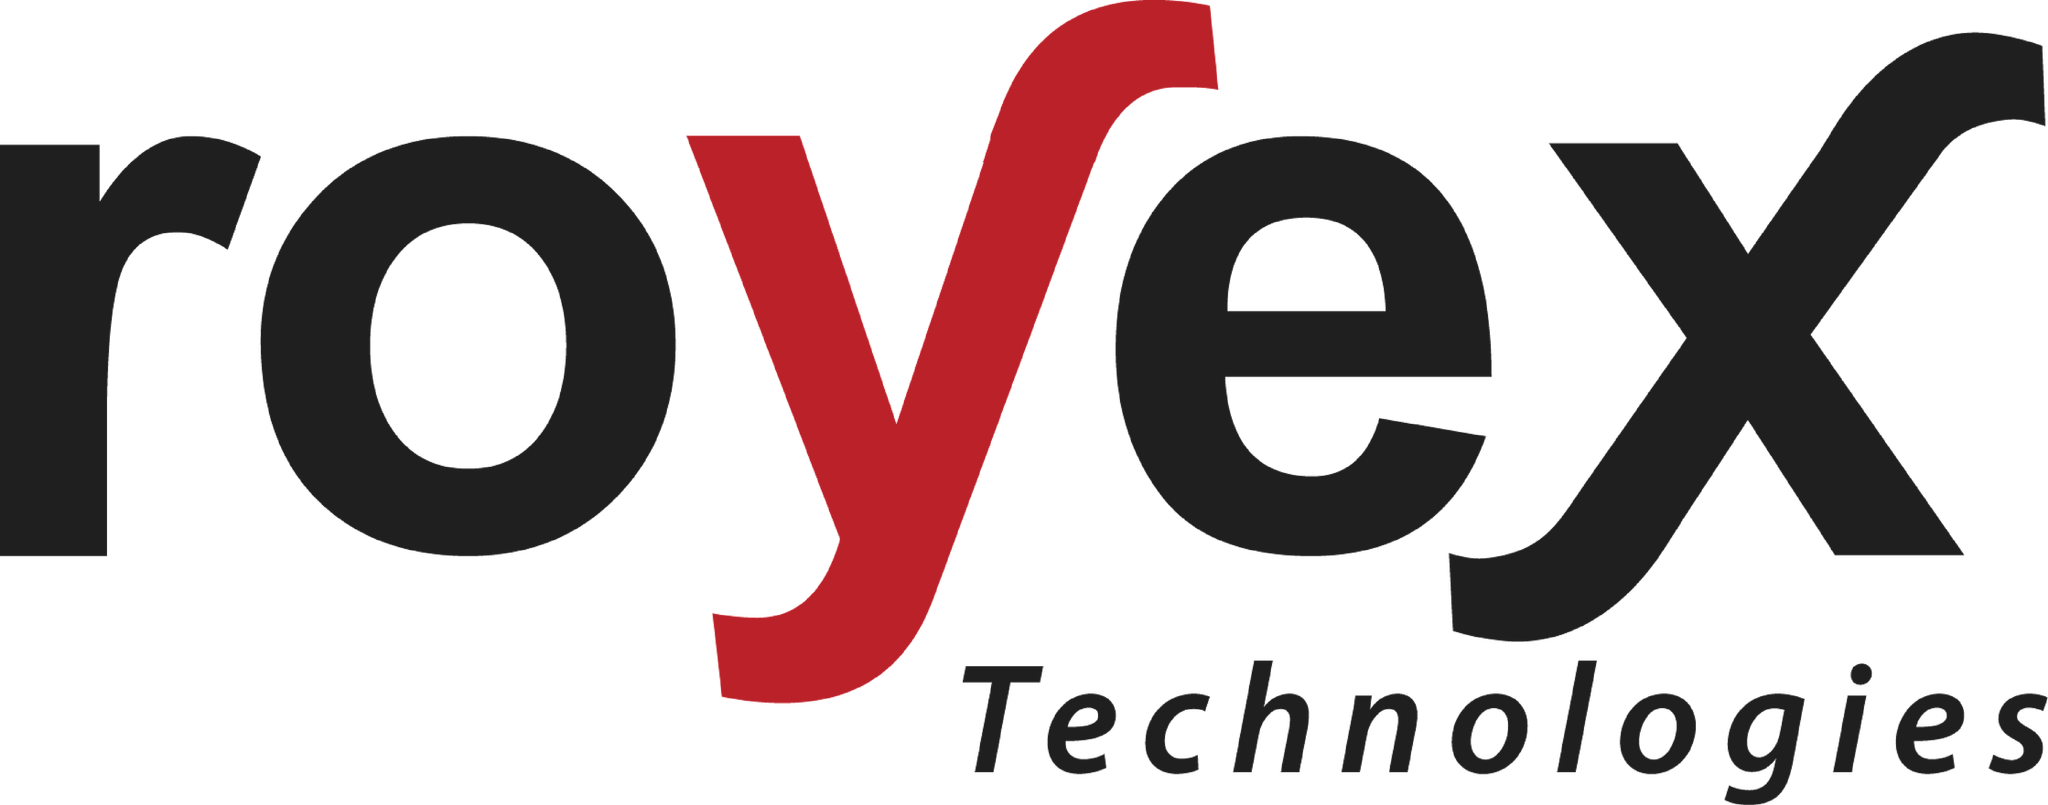 Royex Technologies LLC